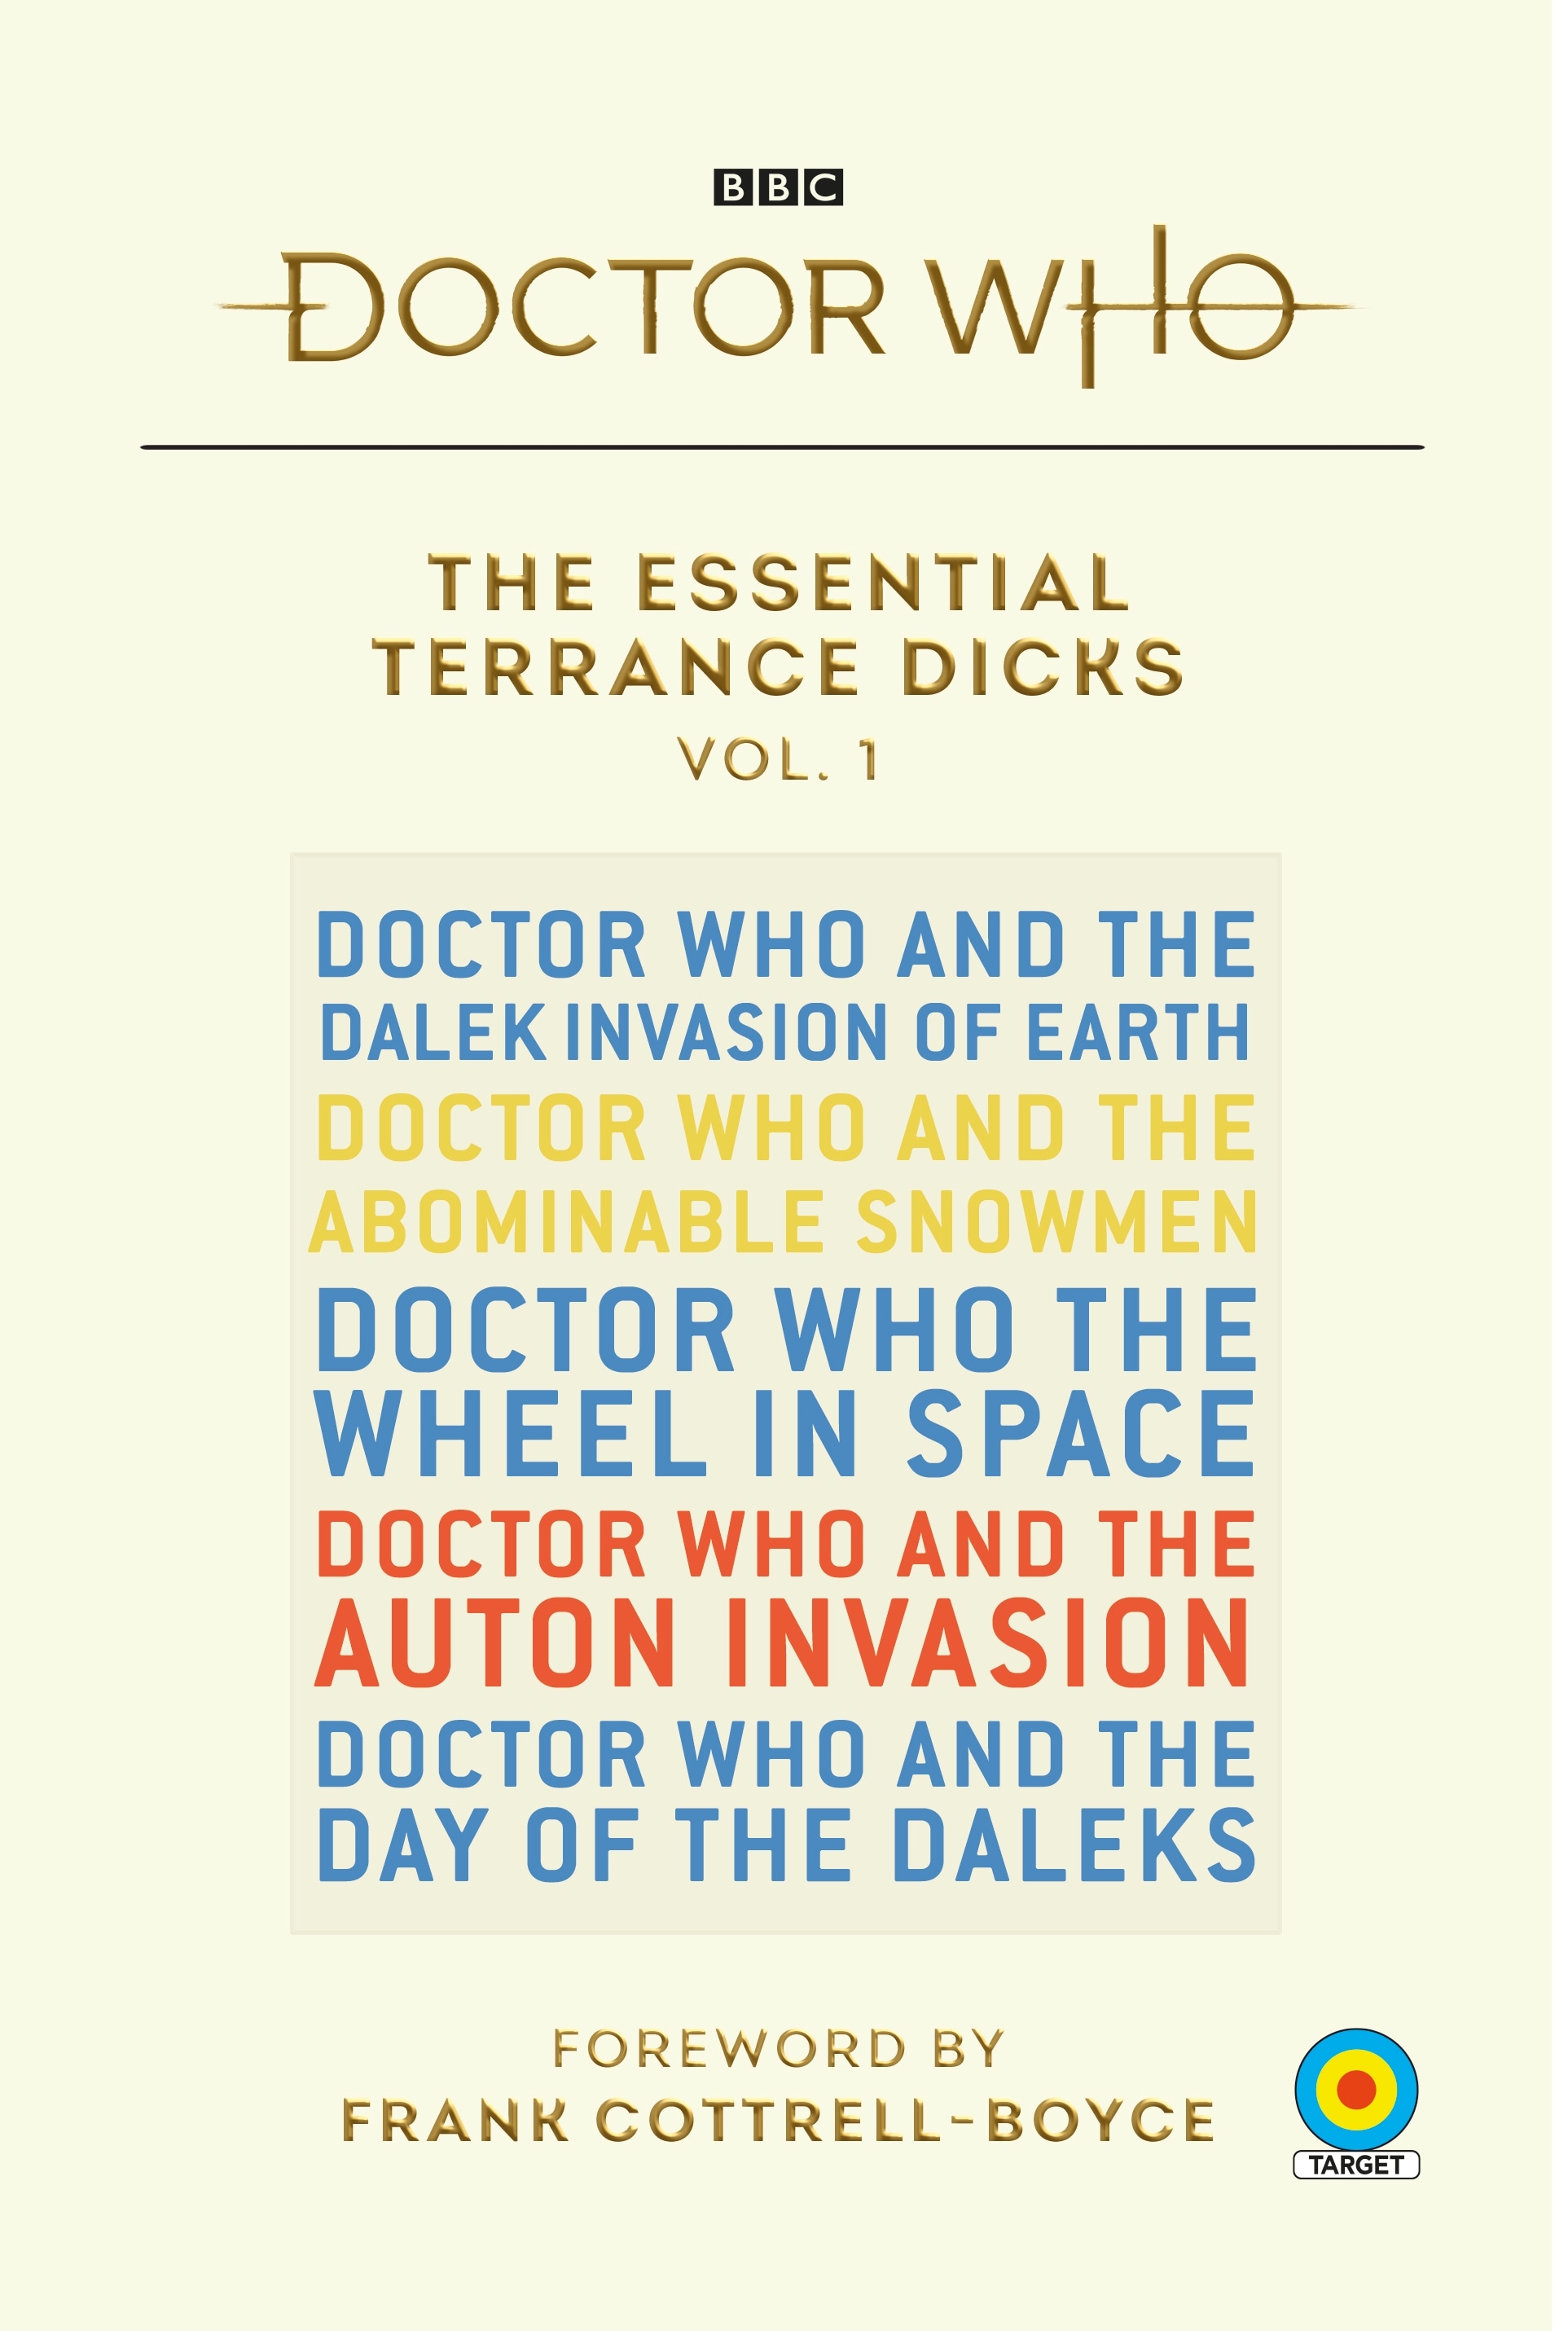 Book “The Essential Terrance Dicks Volume 1” by Terrance Dicks — August 26, 2021